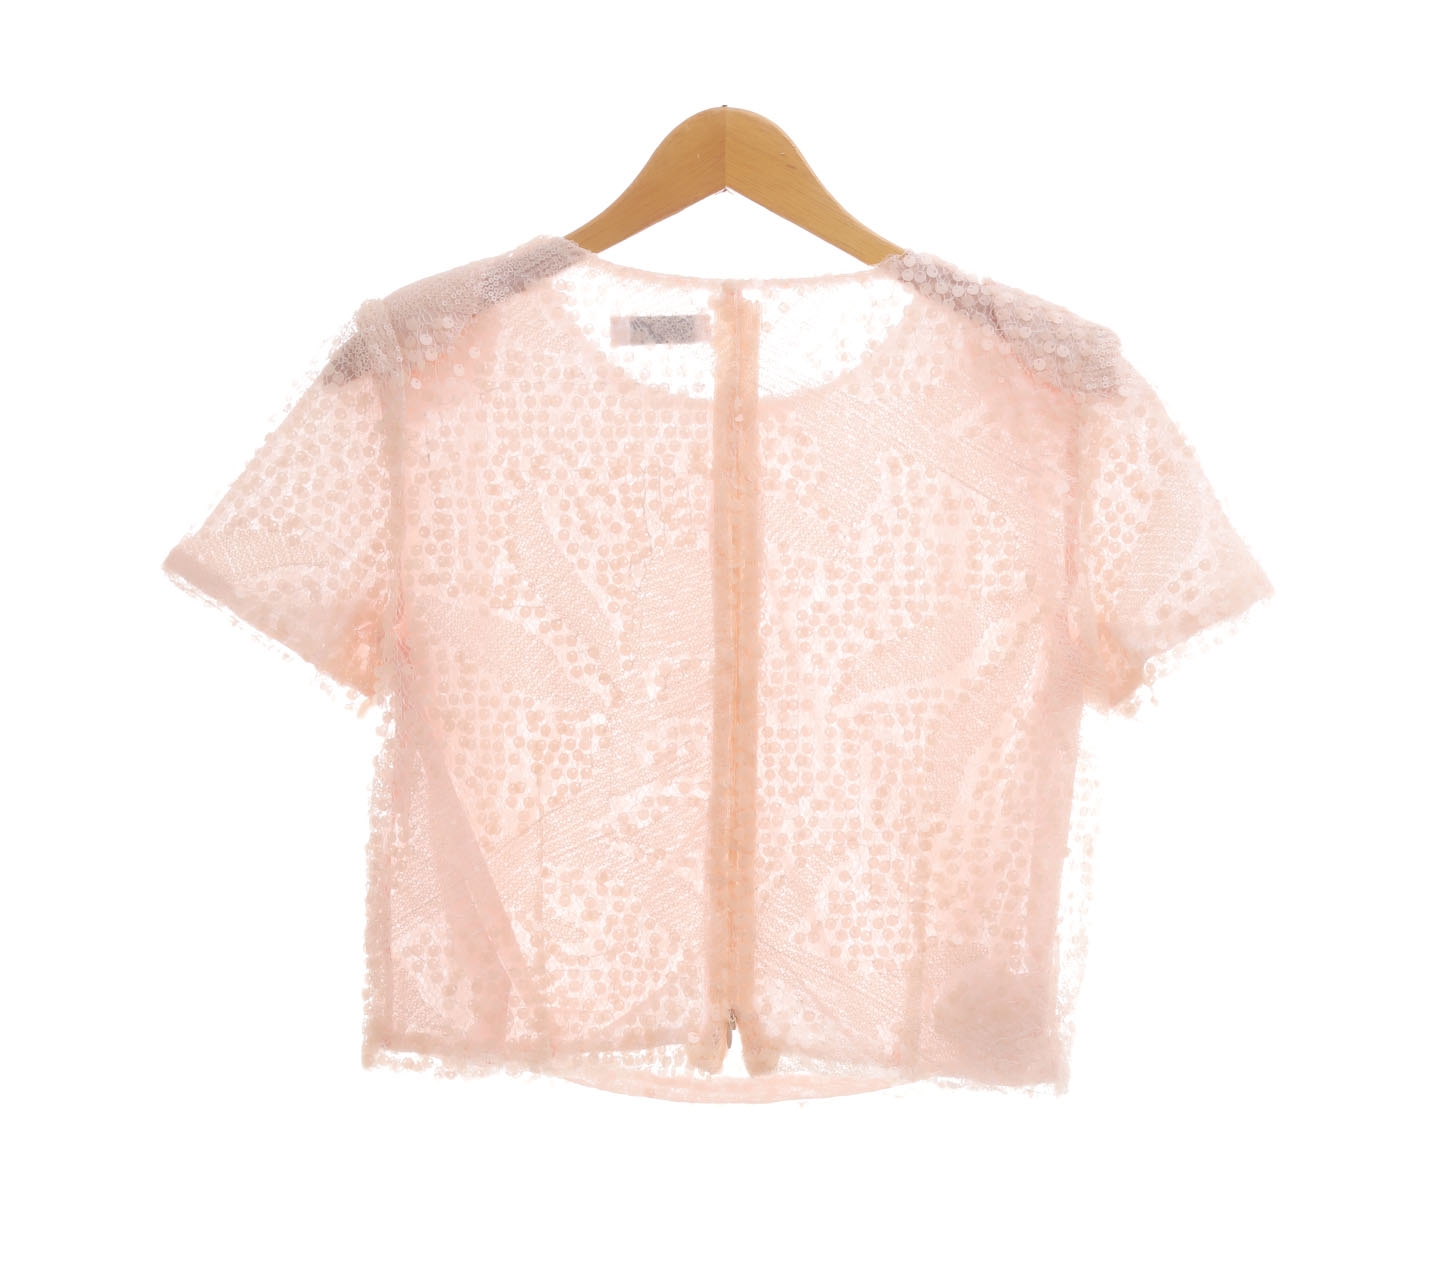 Eloise Soft Sequin Pink Blouse